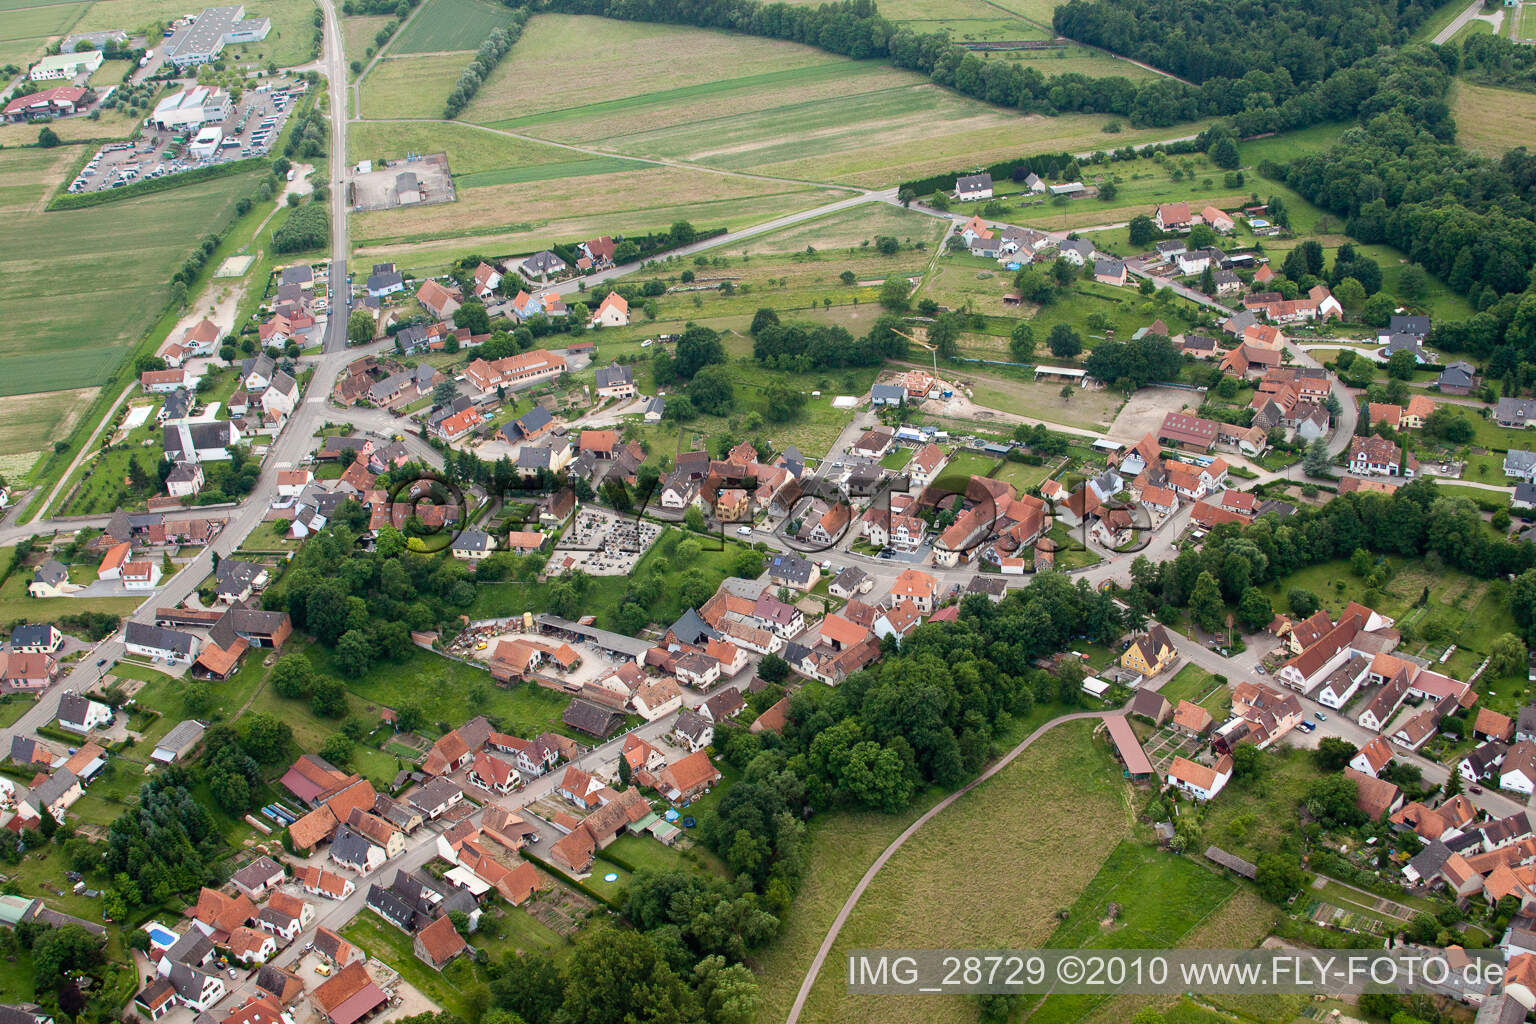 Scheibenhardt in Scheibenhard in the state Bas-Rhin, France from the drone perspective